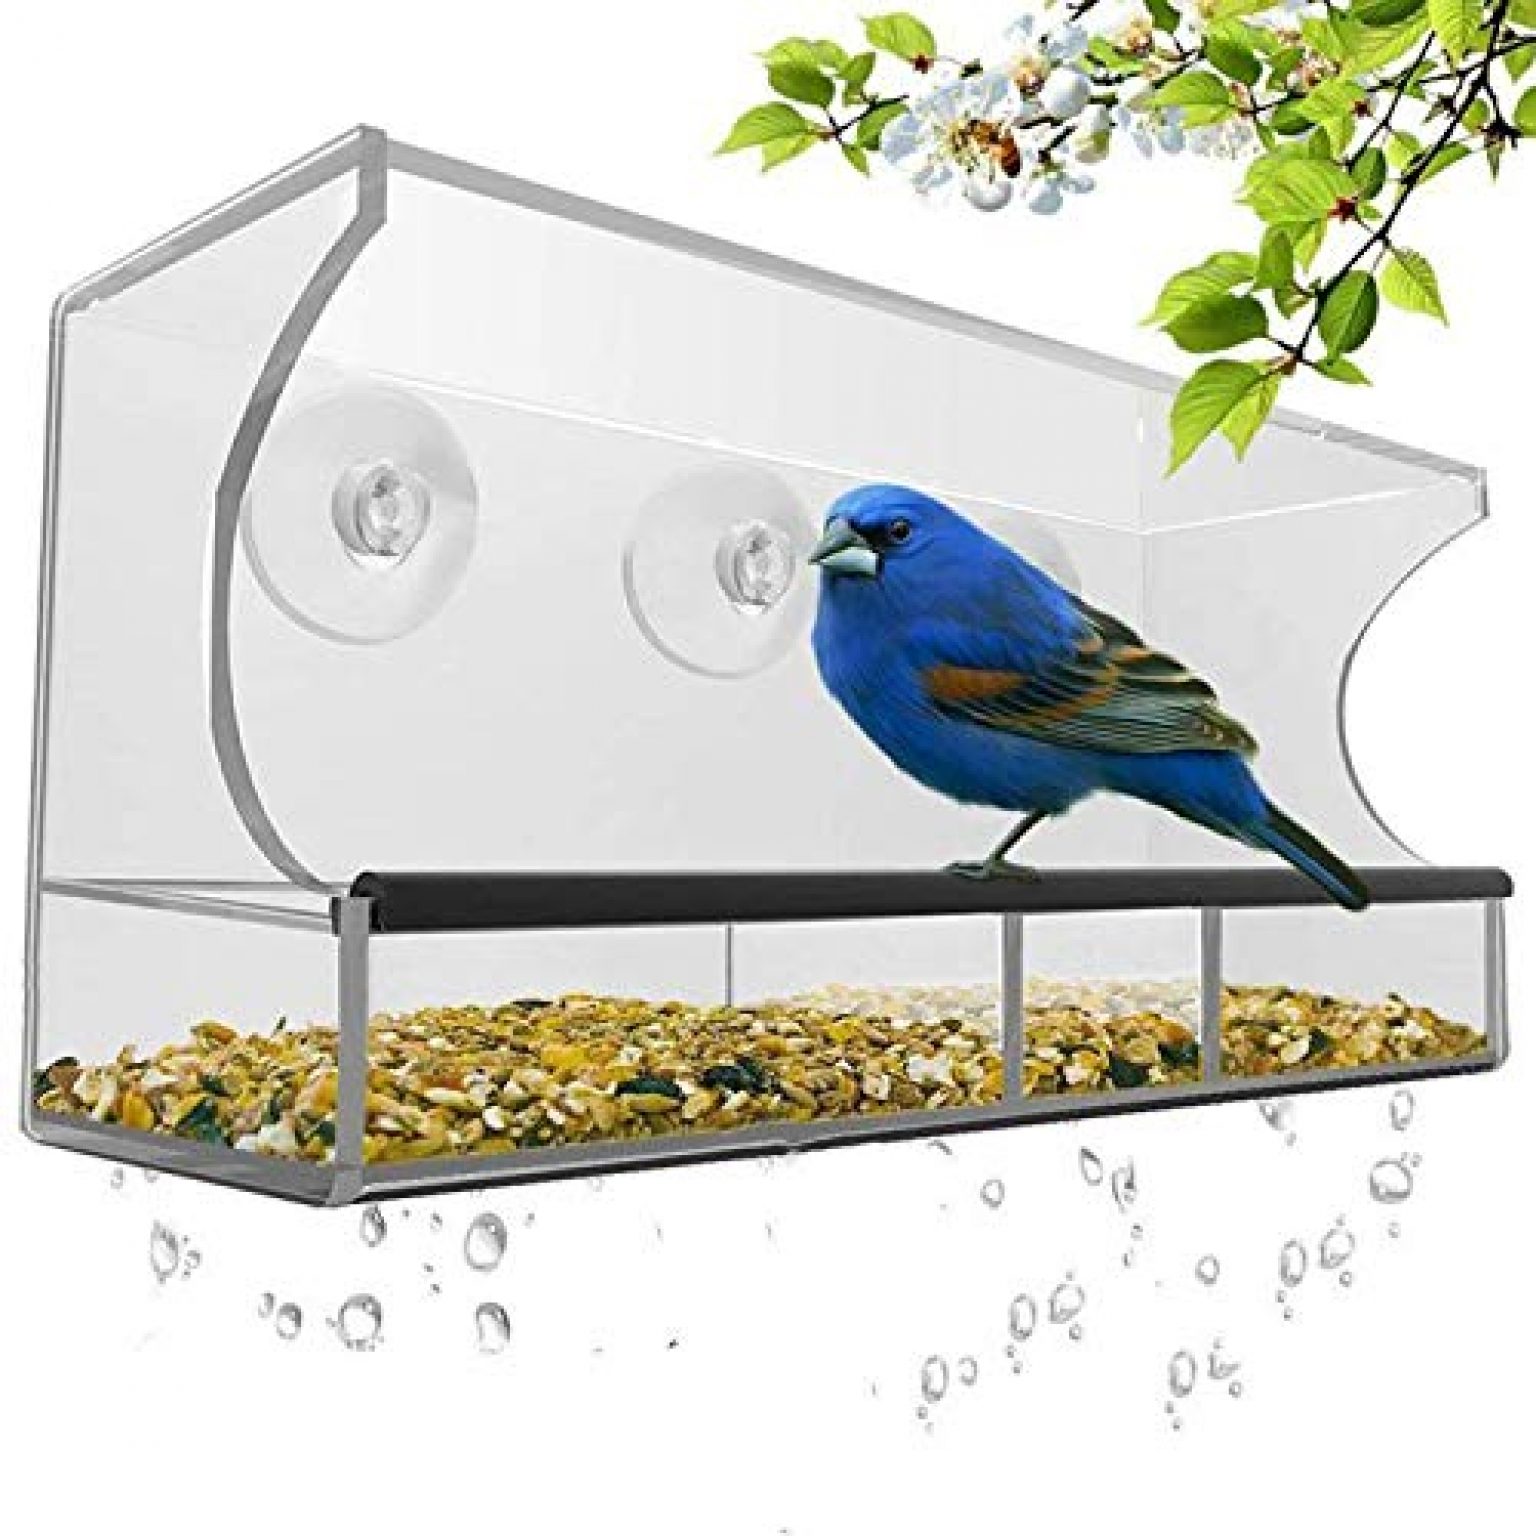 coveside window bird feeder